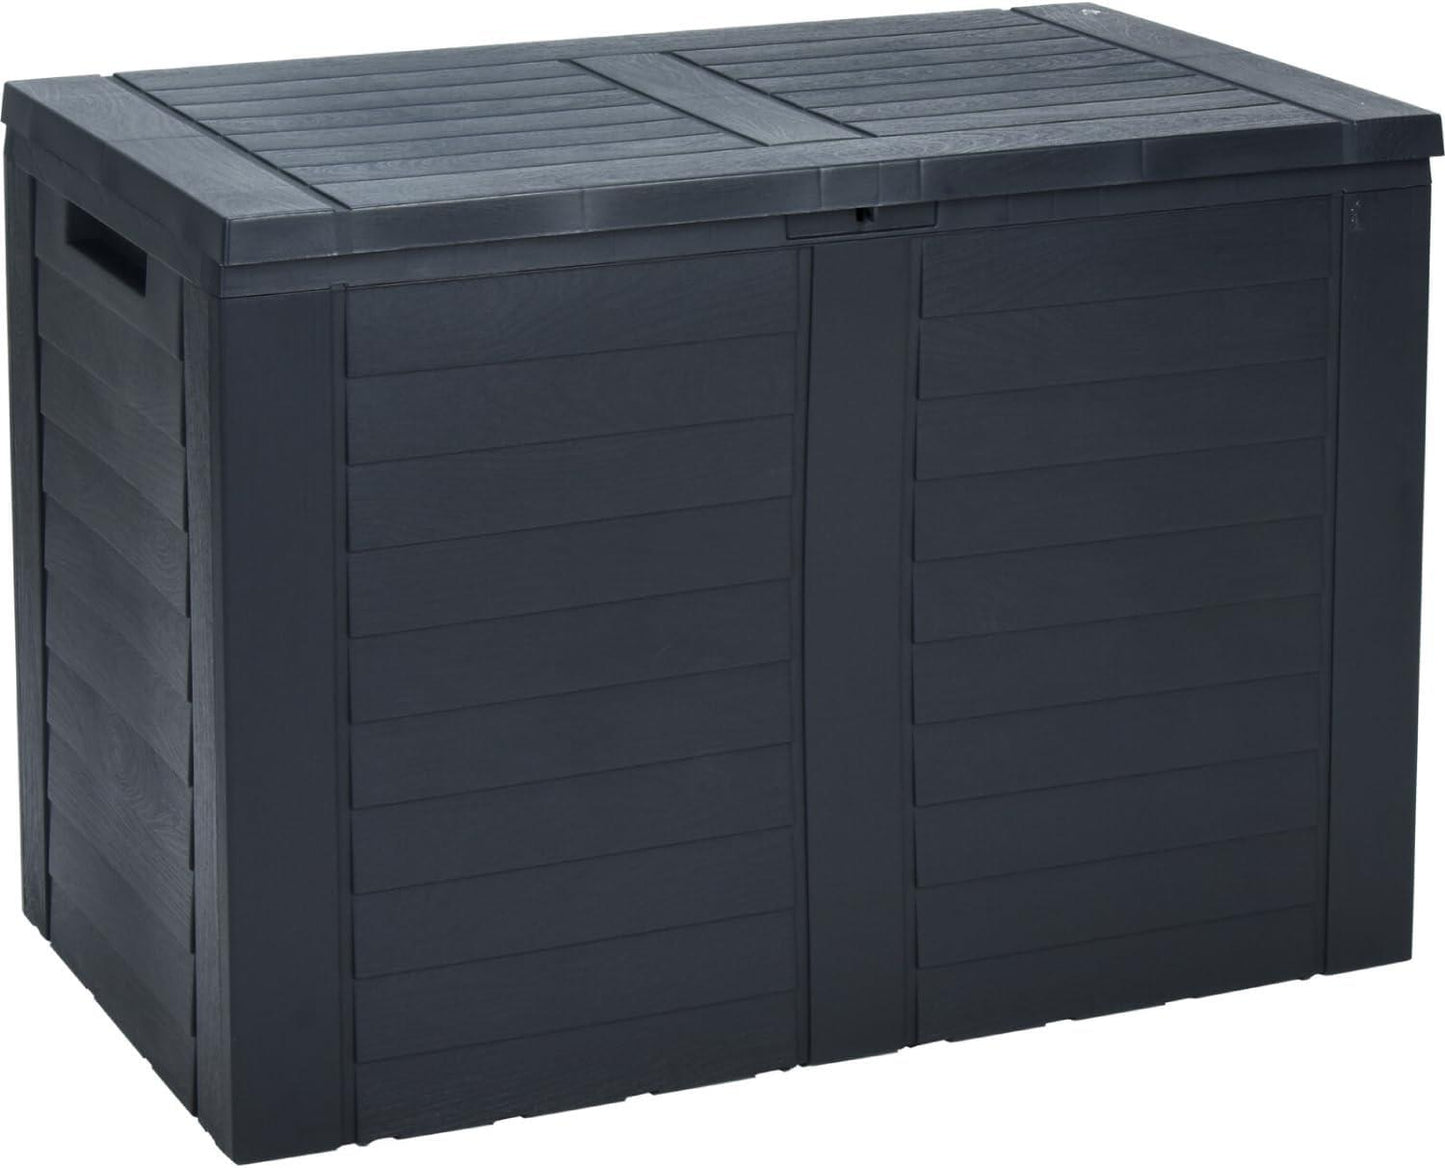 Compact Parcel Box 170L Plastic Garden Storage Outdoor